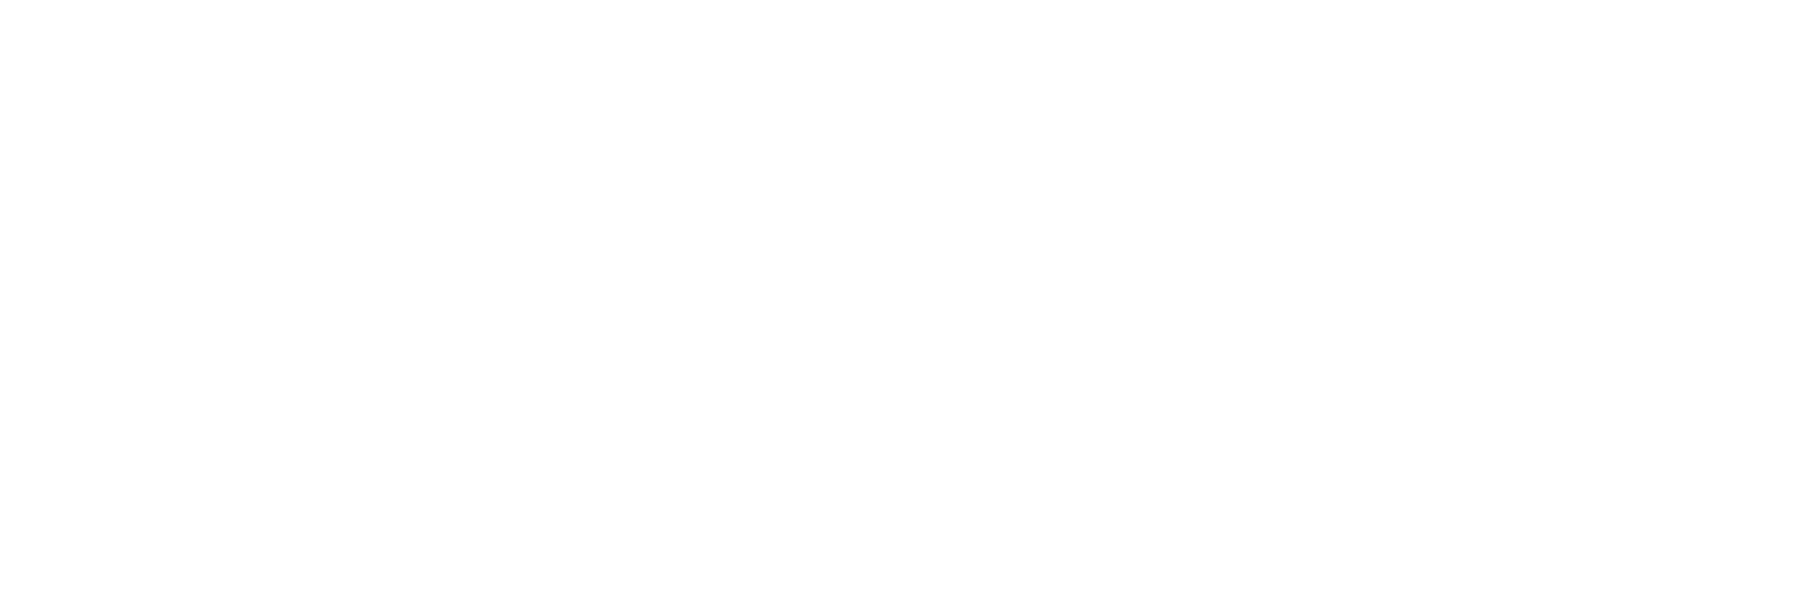 Cost of Living Pulaski Housing